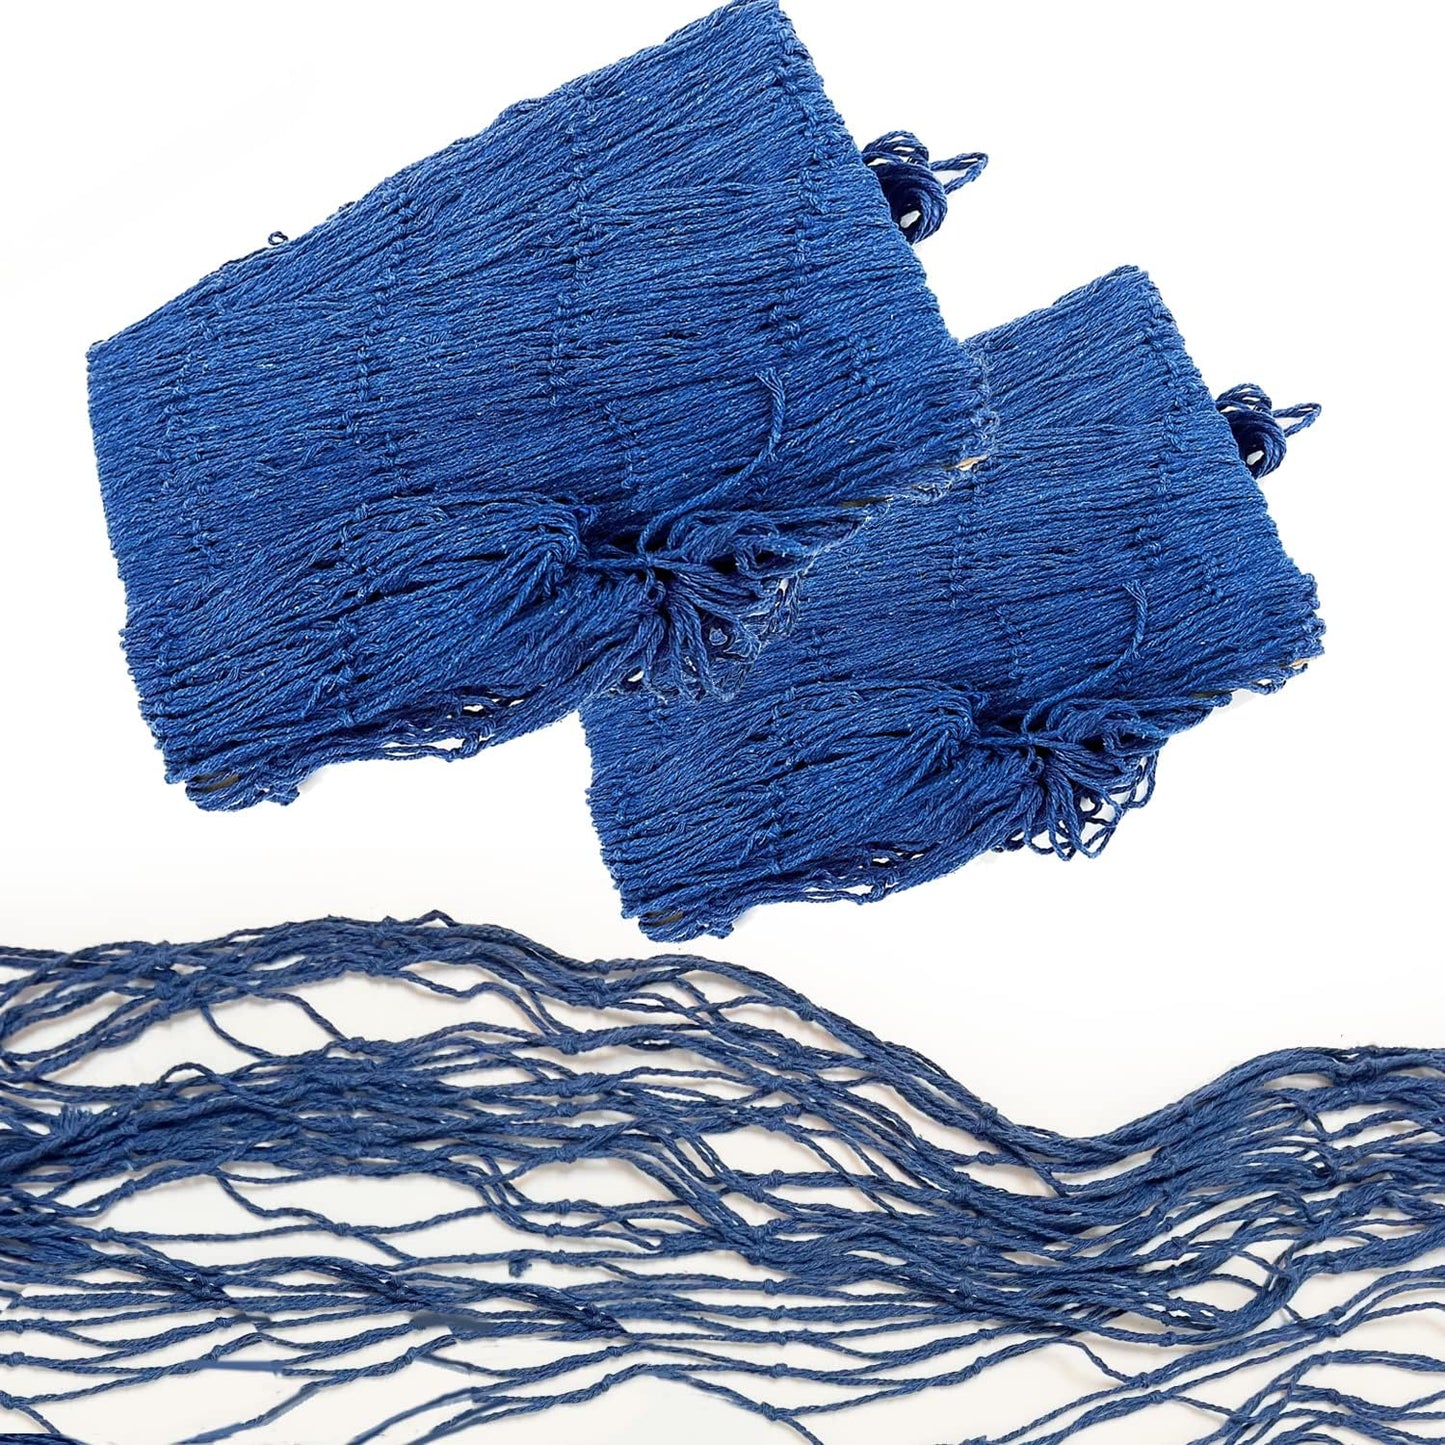 GIFTEXPRESS Natural Cotton Blue Decorative Fishing Net (14 ft x 4 ft)